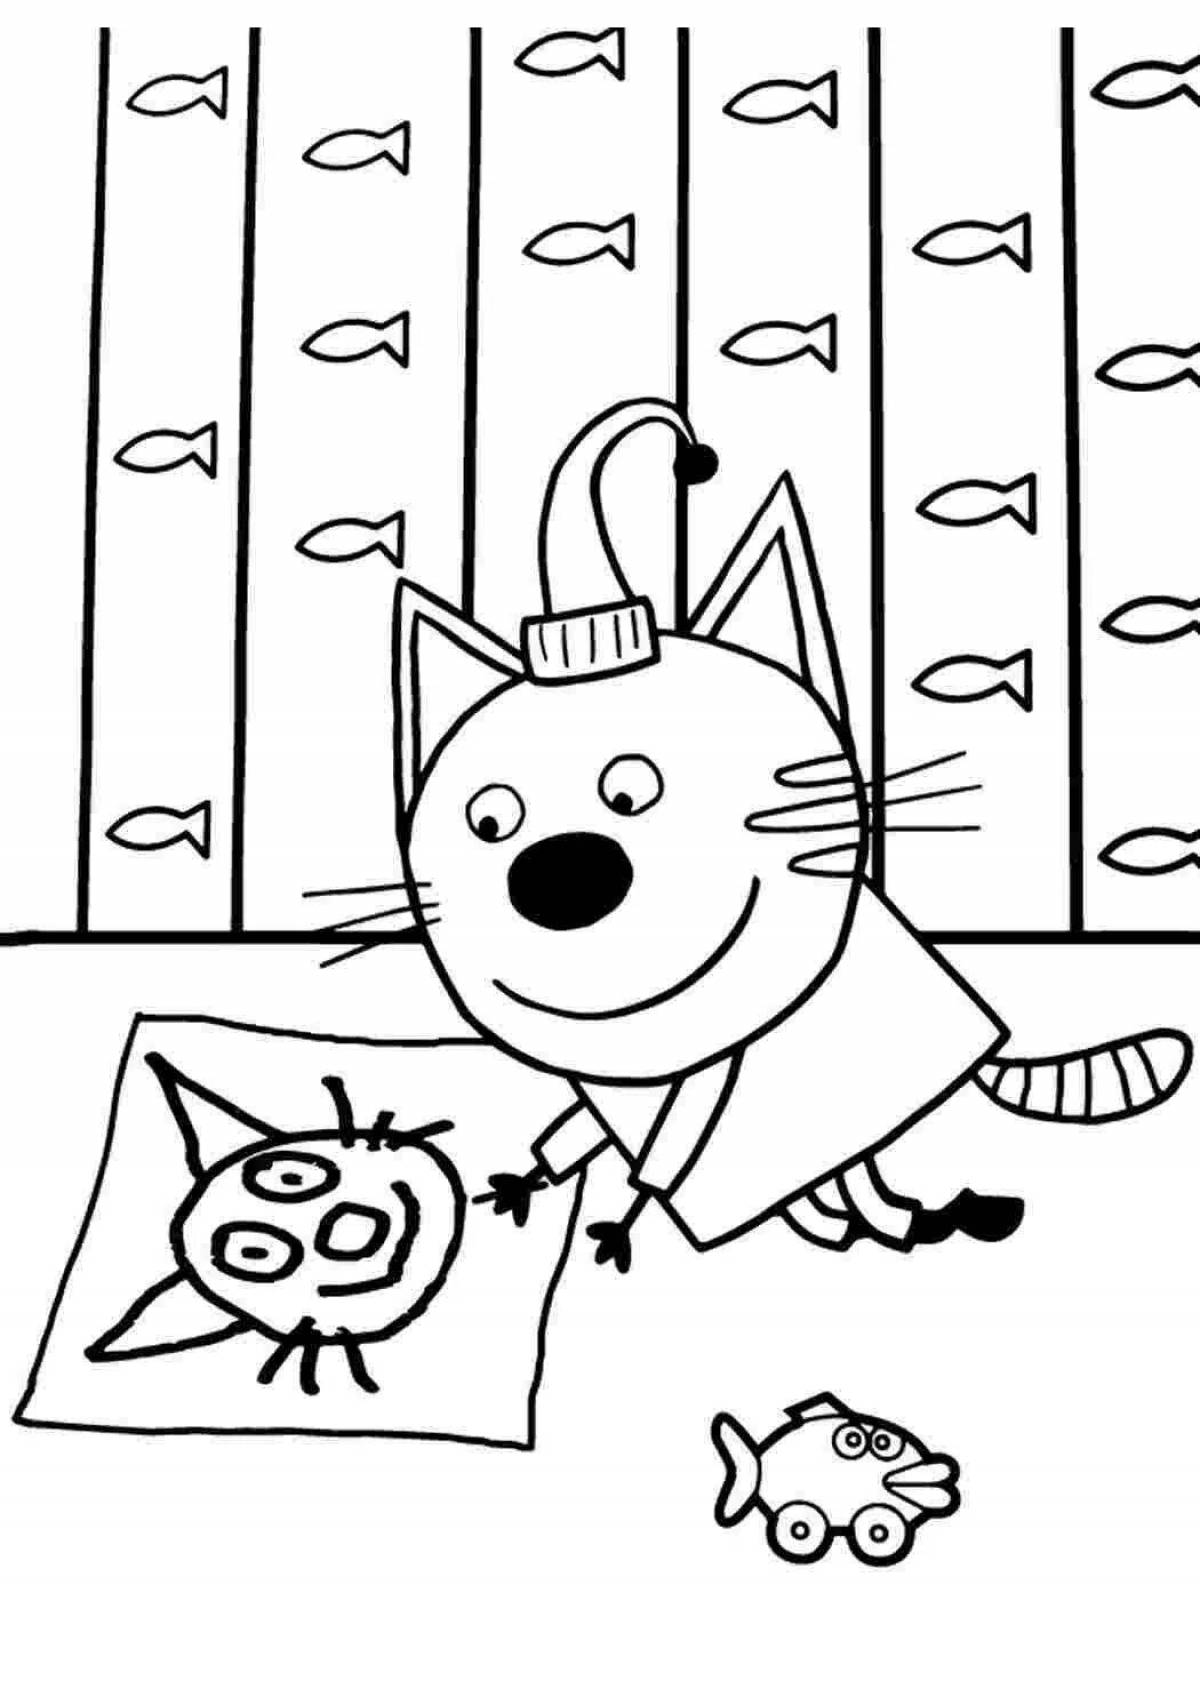 Three cats humorous coloring book